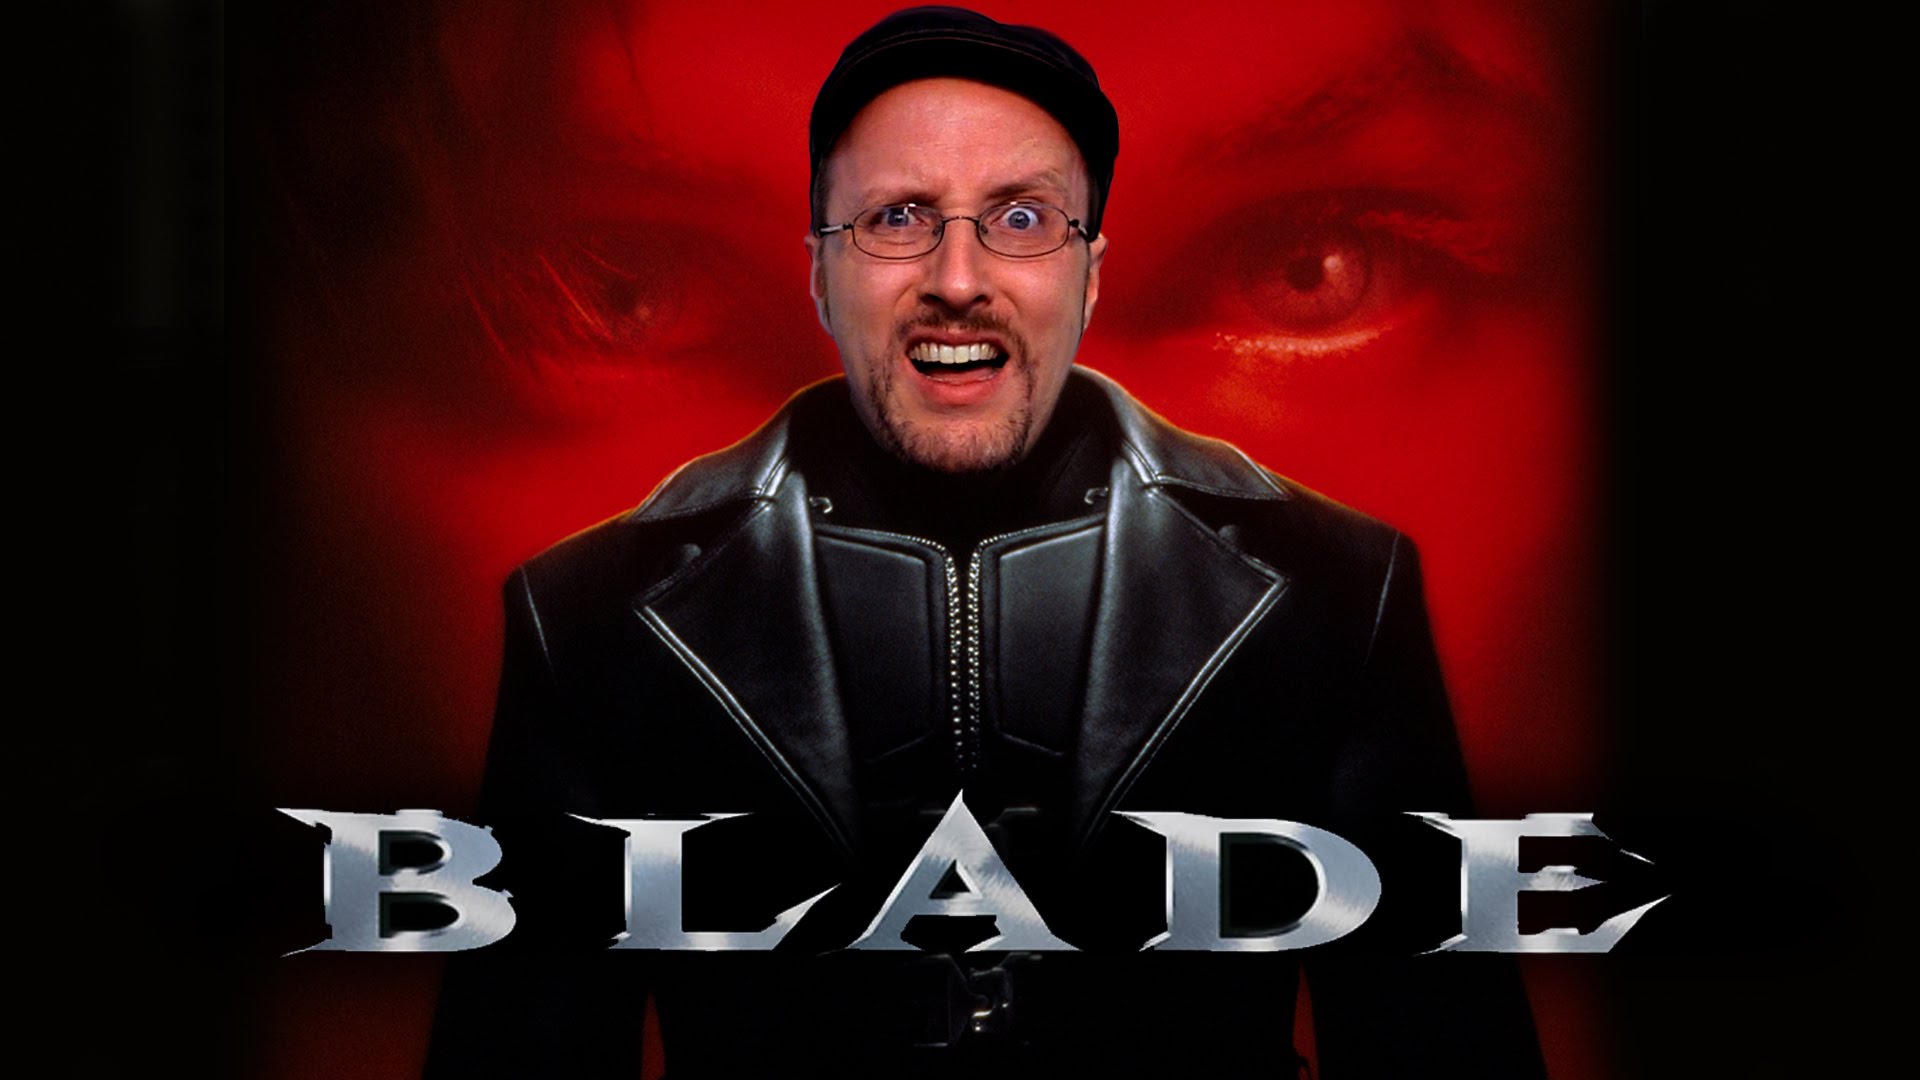 Blade #3